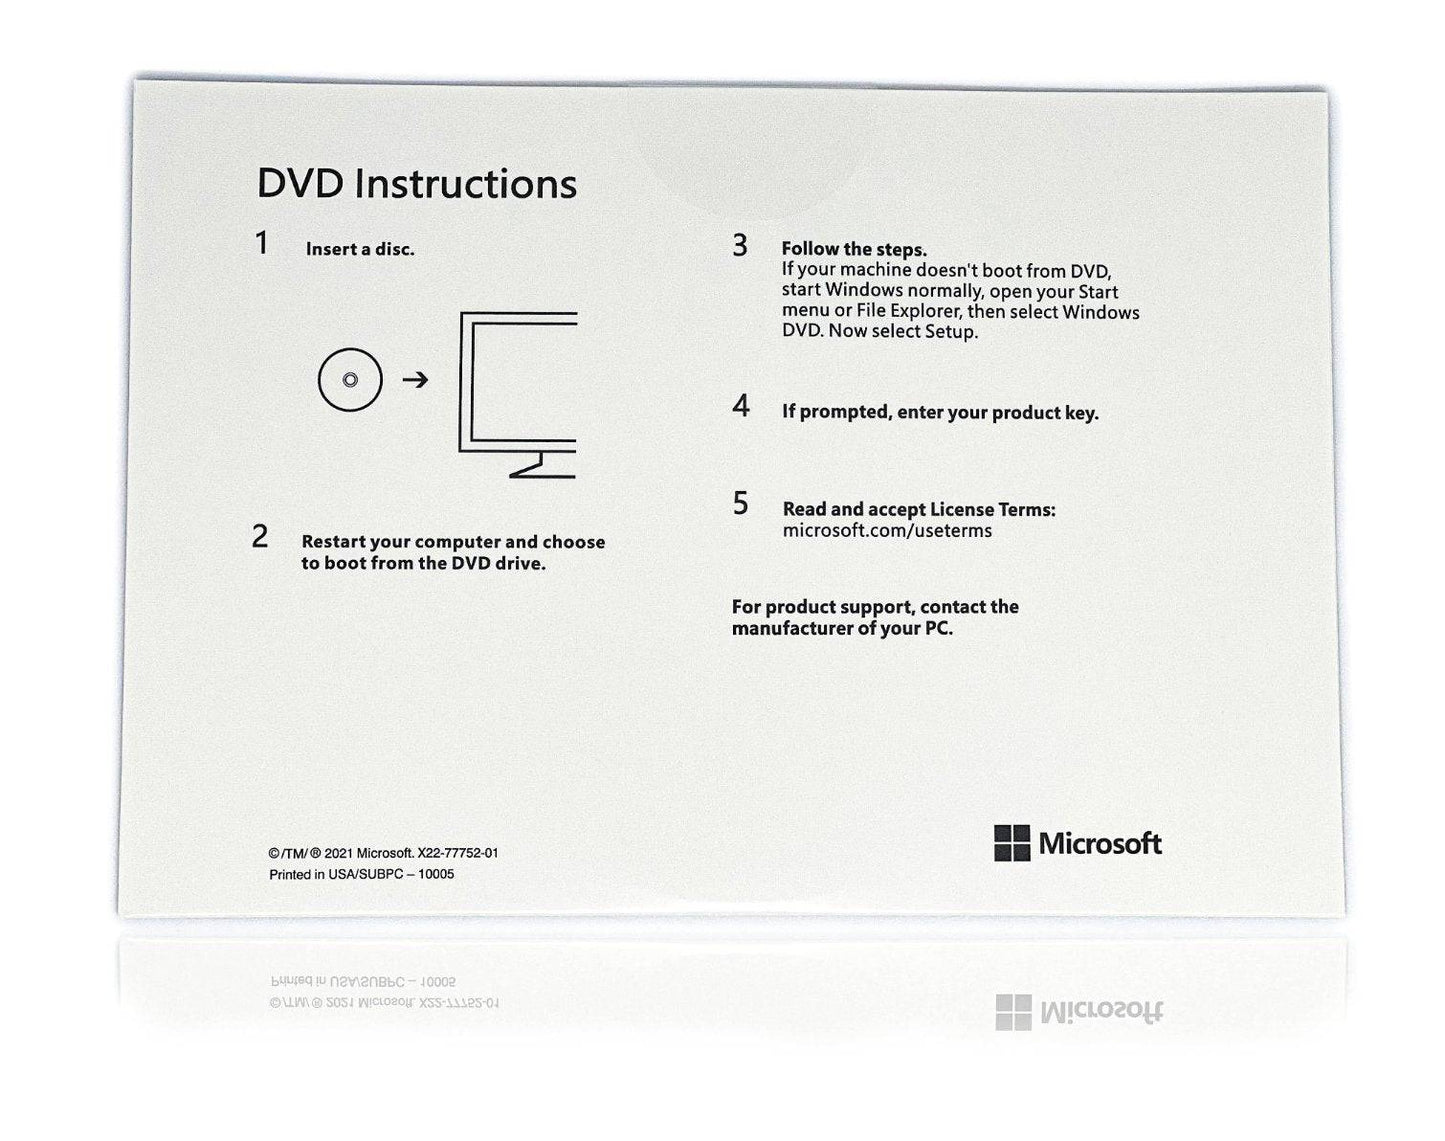 Microsoft Windows 11 Pro 64-Bit English 1PK DSP OEM DVD | License Activation Key for 1 PC | Full Version | FQC-10528 | Australian Stock - INFINITE-ITECH